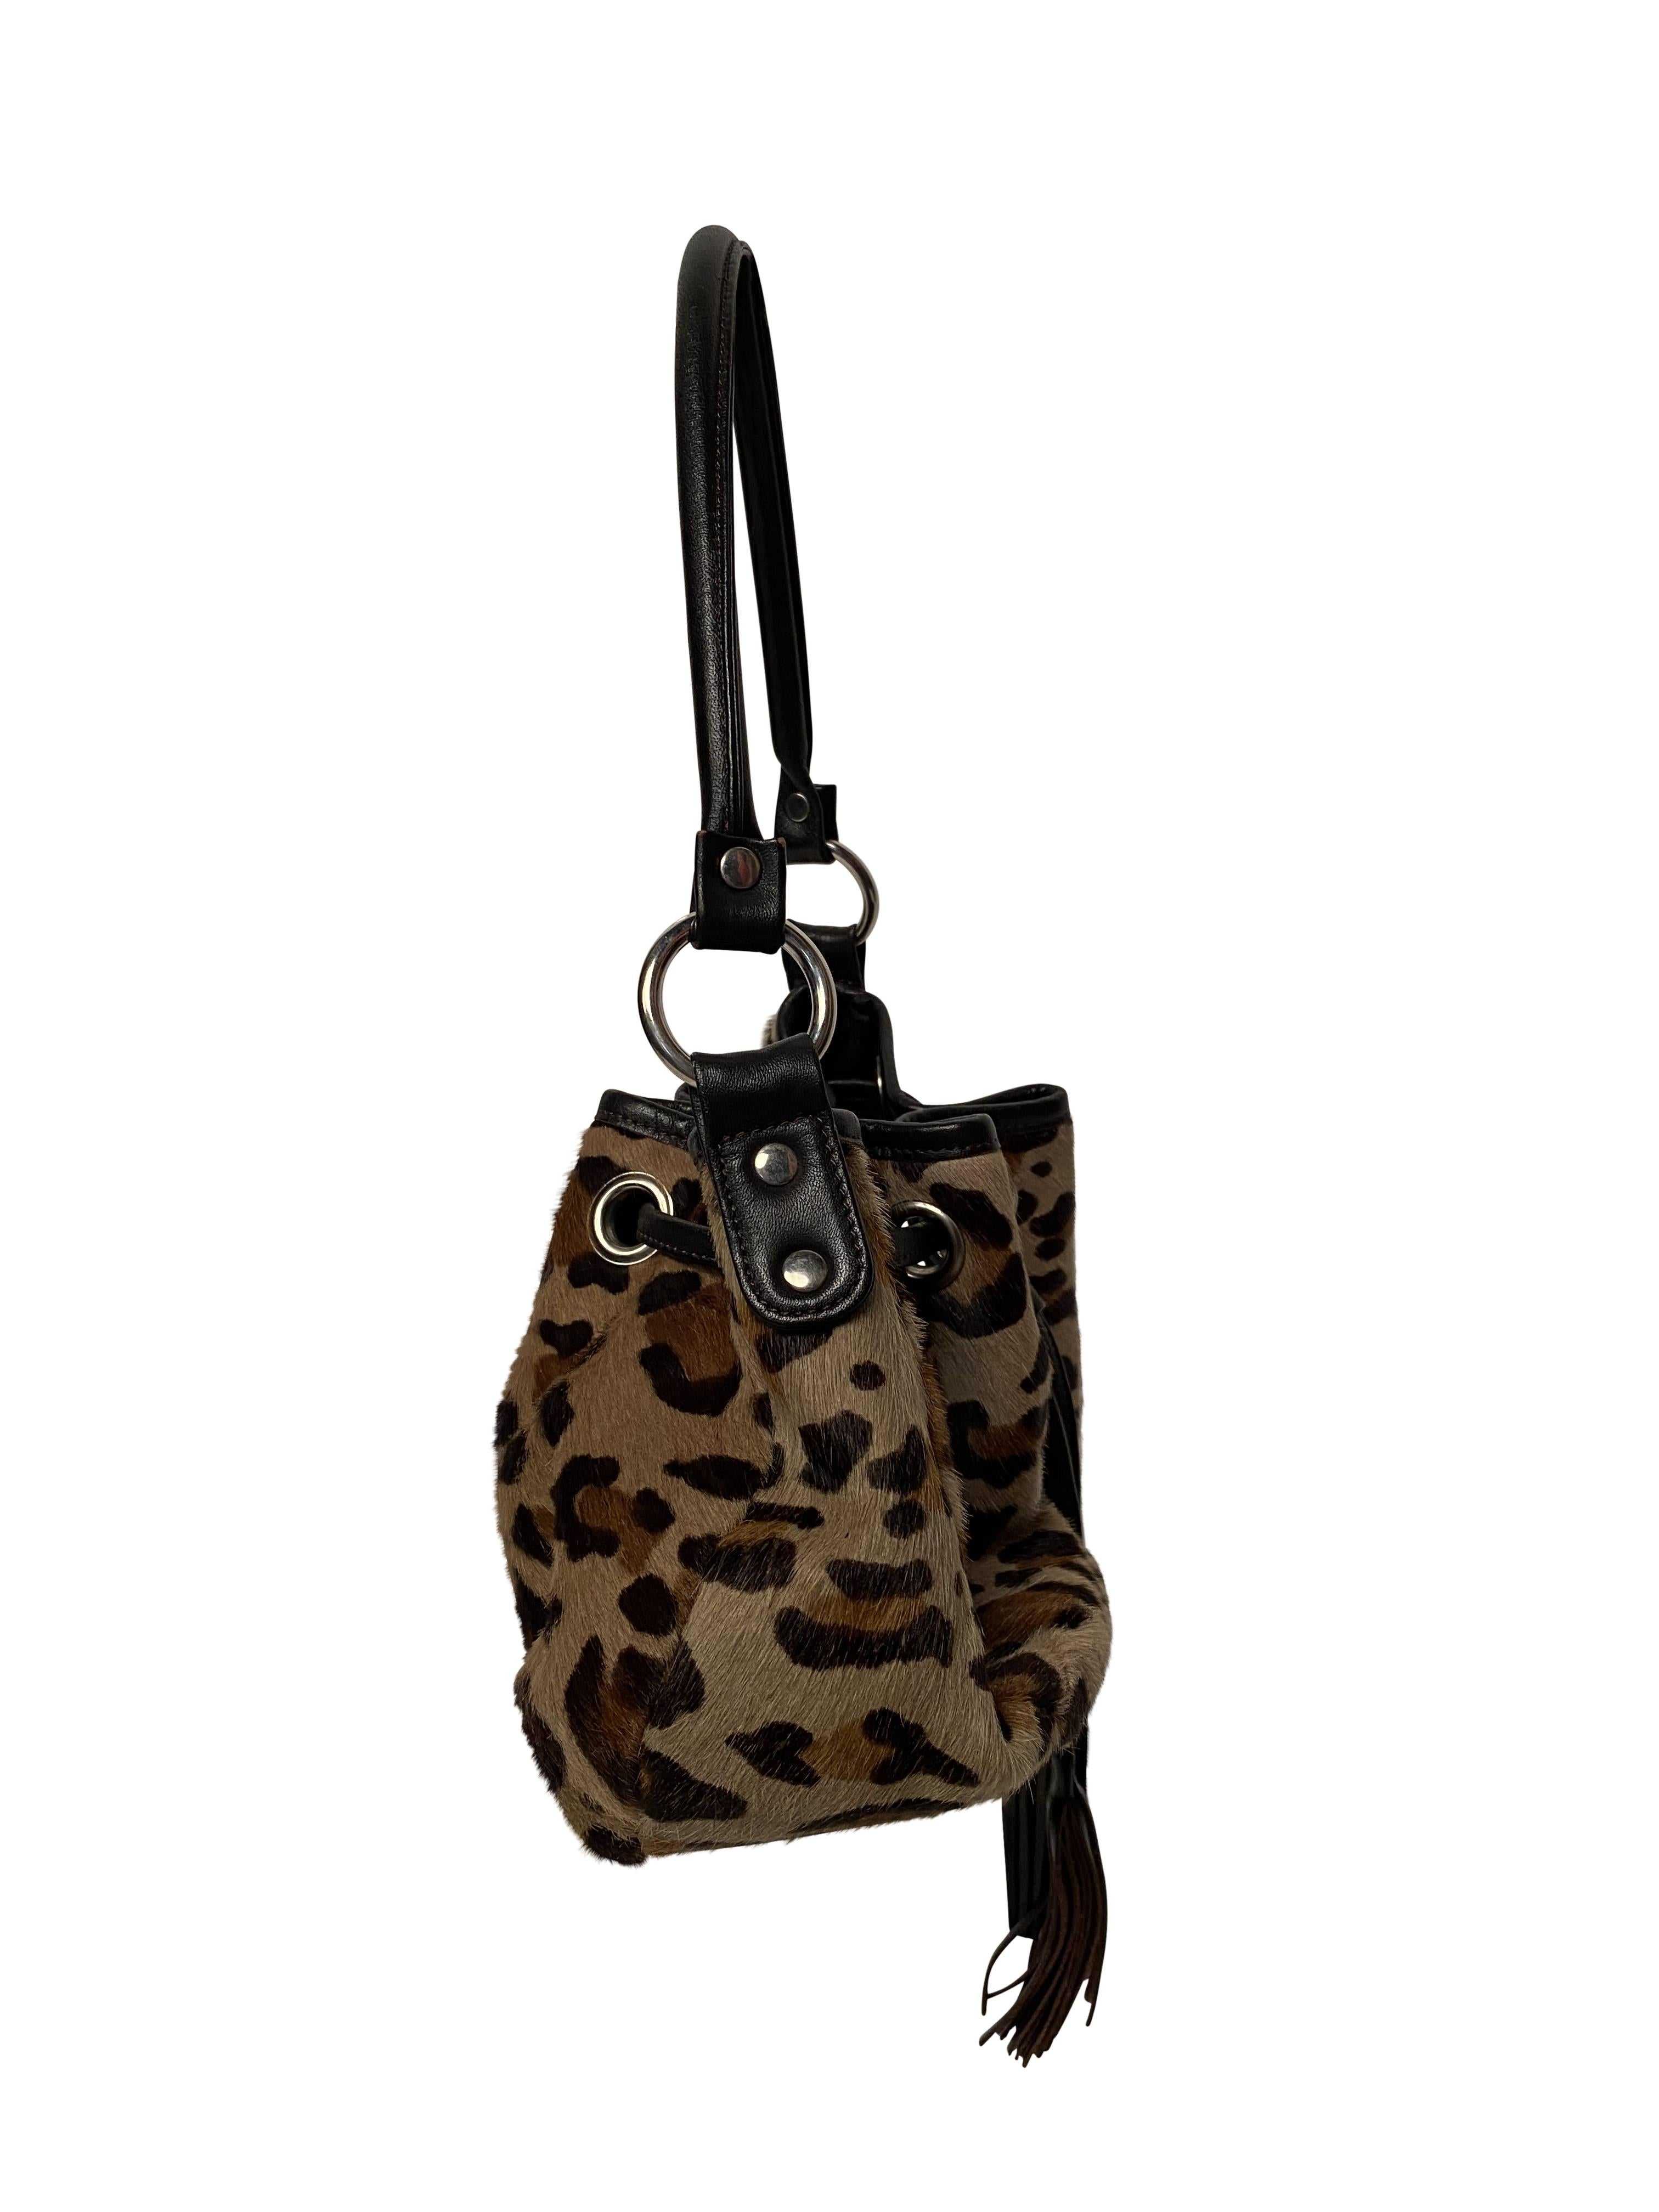 Barneys New York Leopard Print Handbag In Good Condition For Sale In Melbourne, Victoria